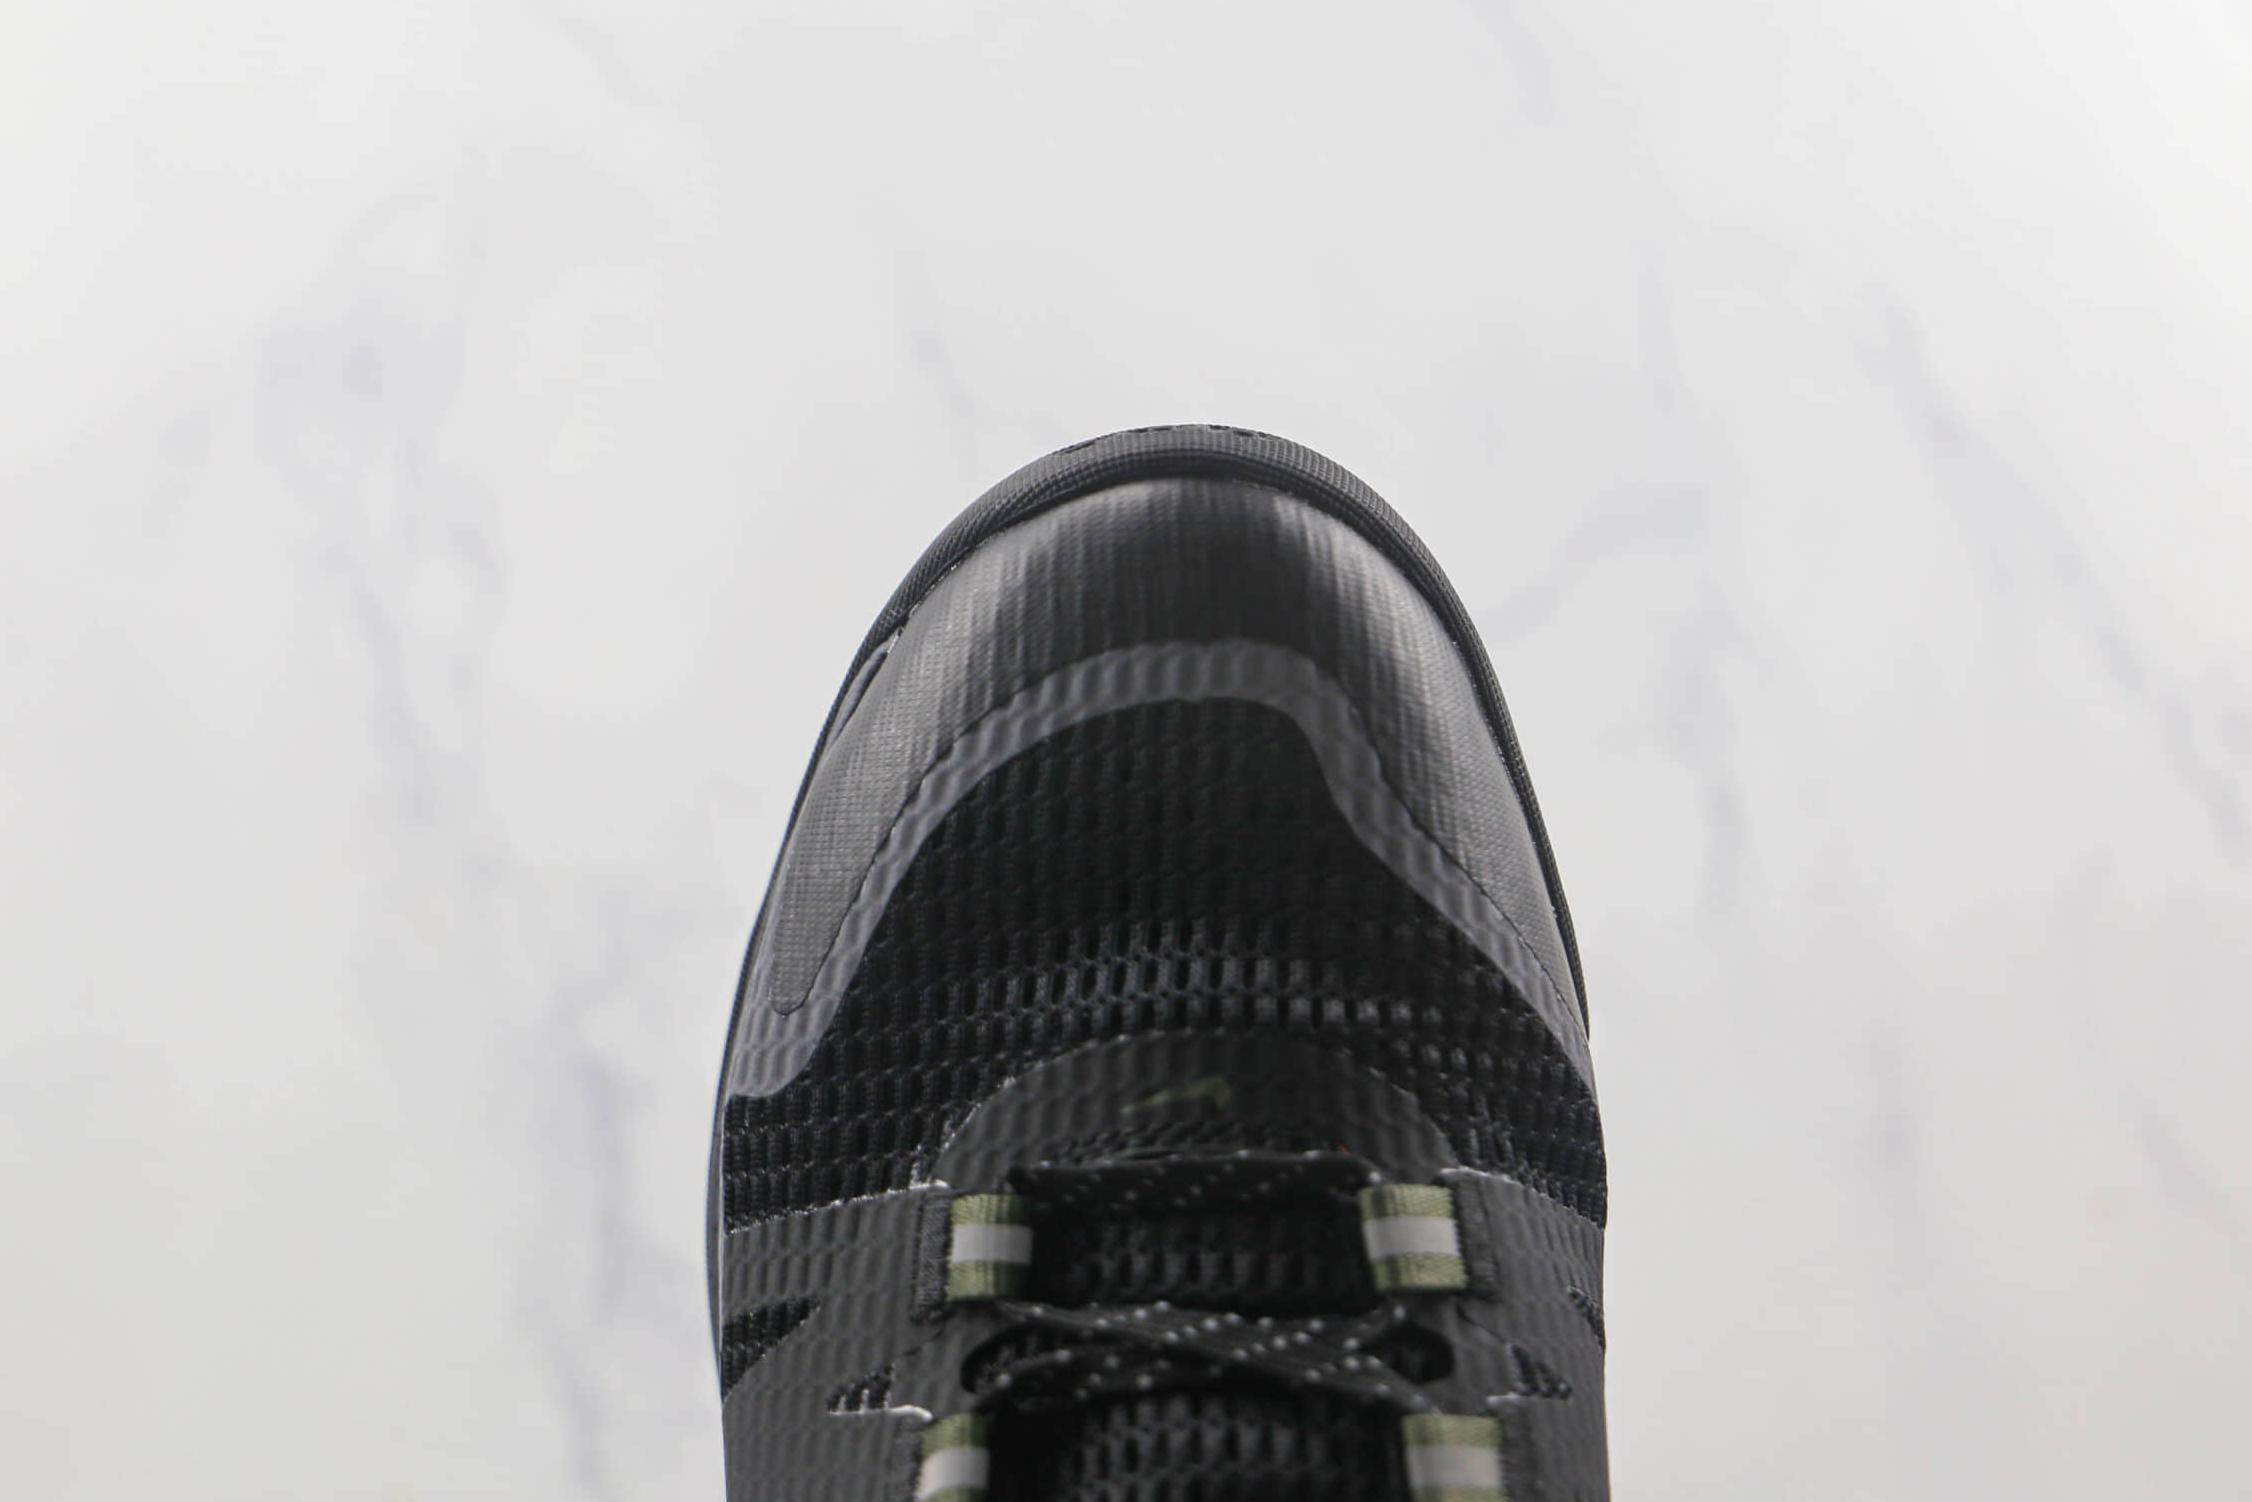 Nike ACG Air Nasu Gore-Tex 'Clay Green' CW6020-300 - Waterproof Trail Sneakers